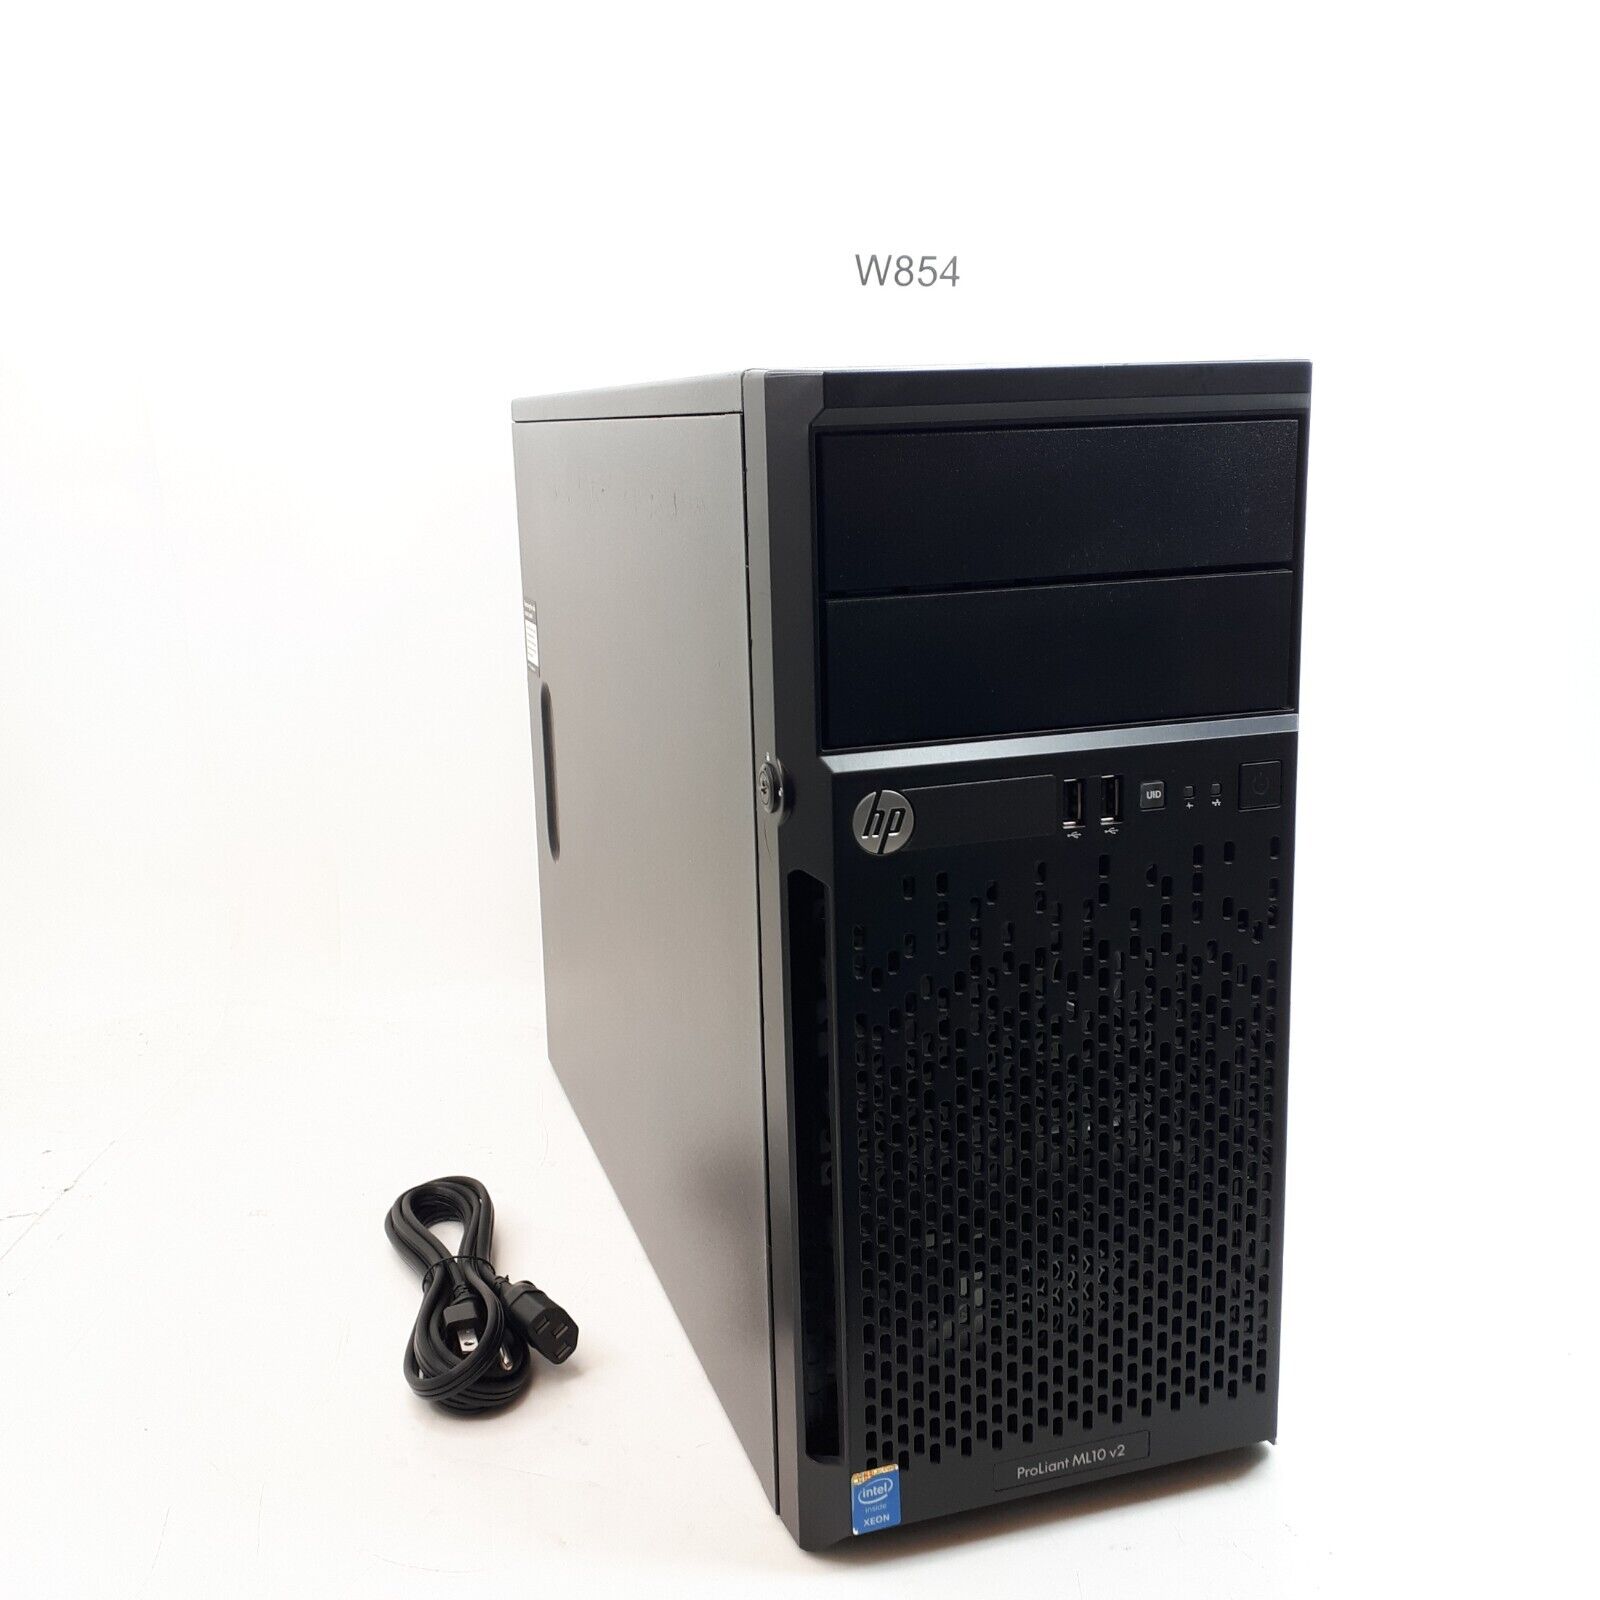 HP Proliant ML10 v2 Tower Server Xeon E3-1220 v3 8GB Boot/BIOS No HDD OS W854